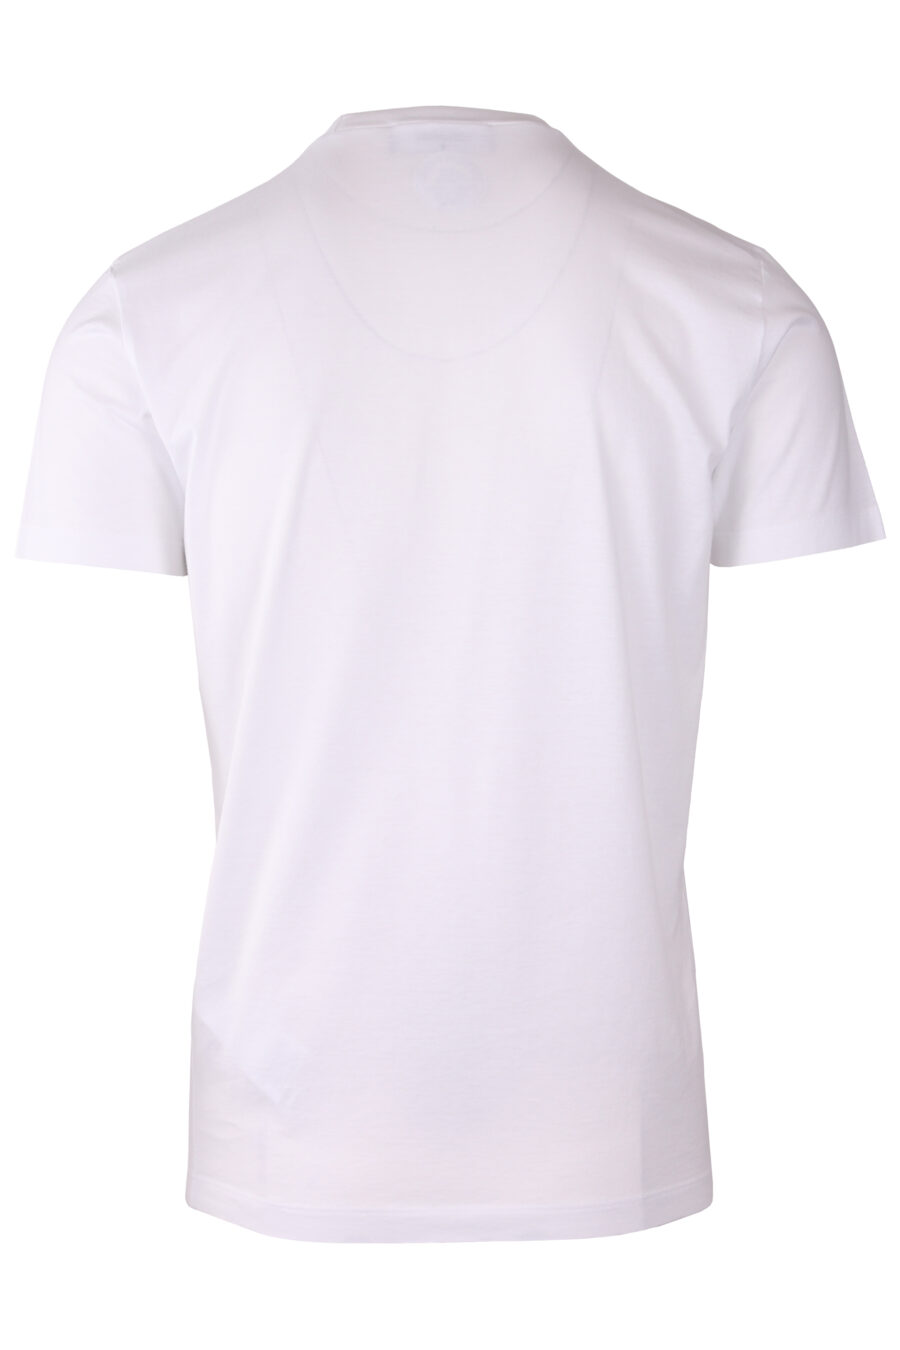 T-shirt blanc avec texte maxilogo "dean and dan caten" - IMG 8980